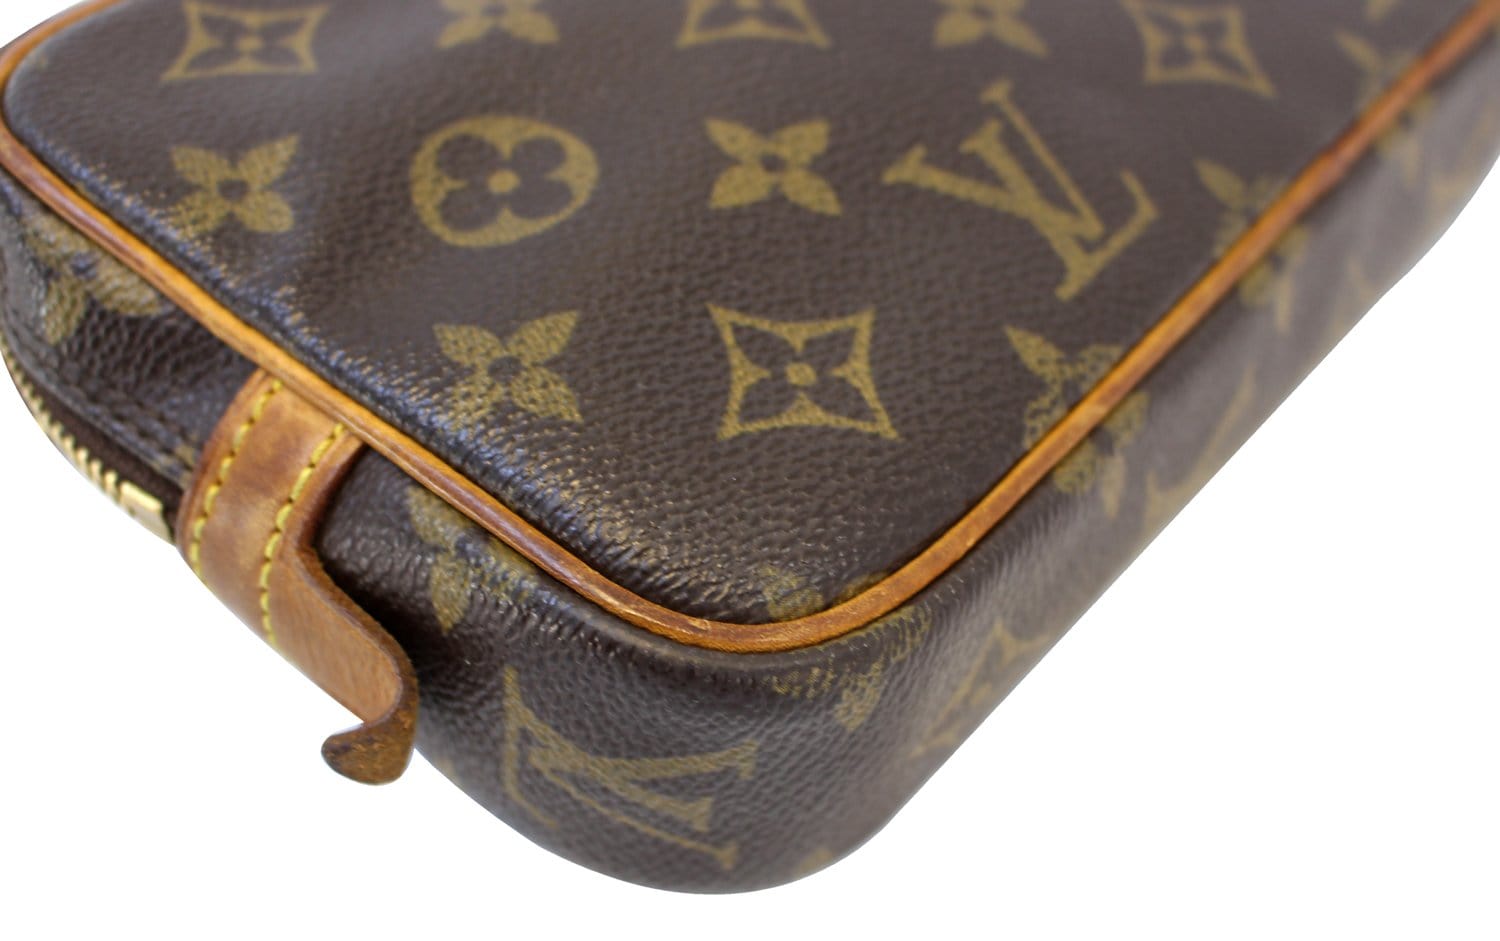 Louis Vuitton Pochette Marly Bandouliere Bag Monogram 4034921  Louis  vuitton, Louis vuitton handbags, Louis vuitton pochette